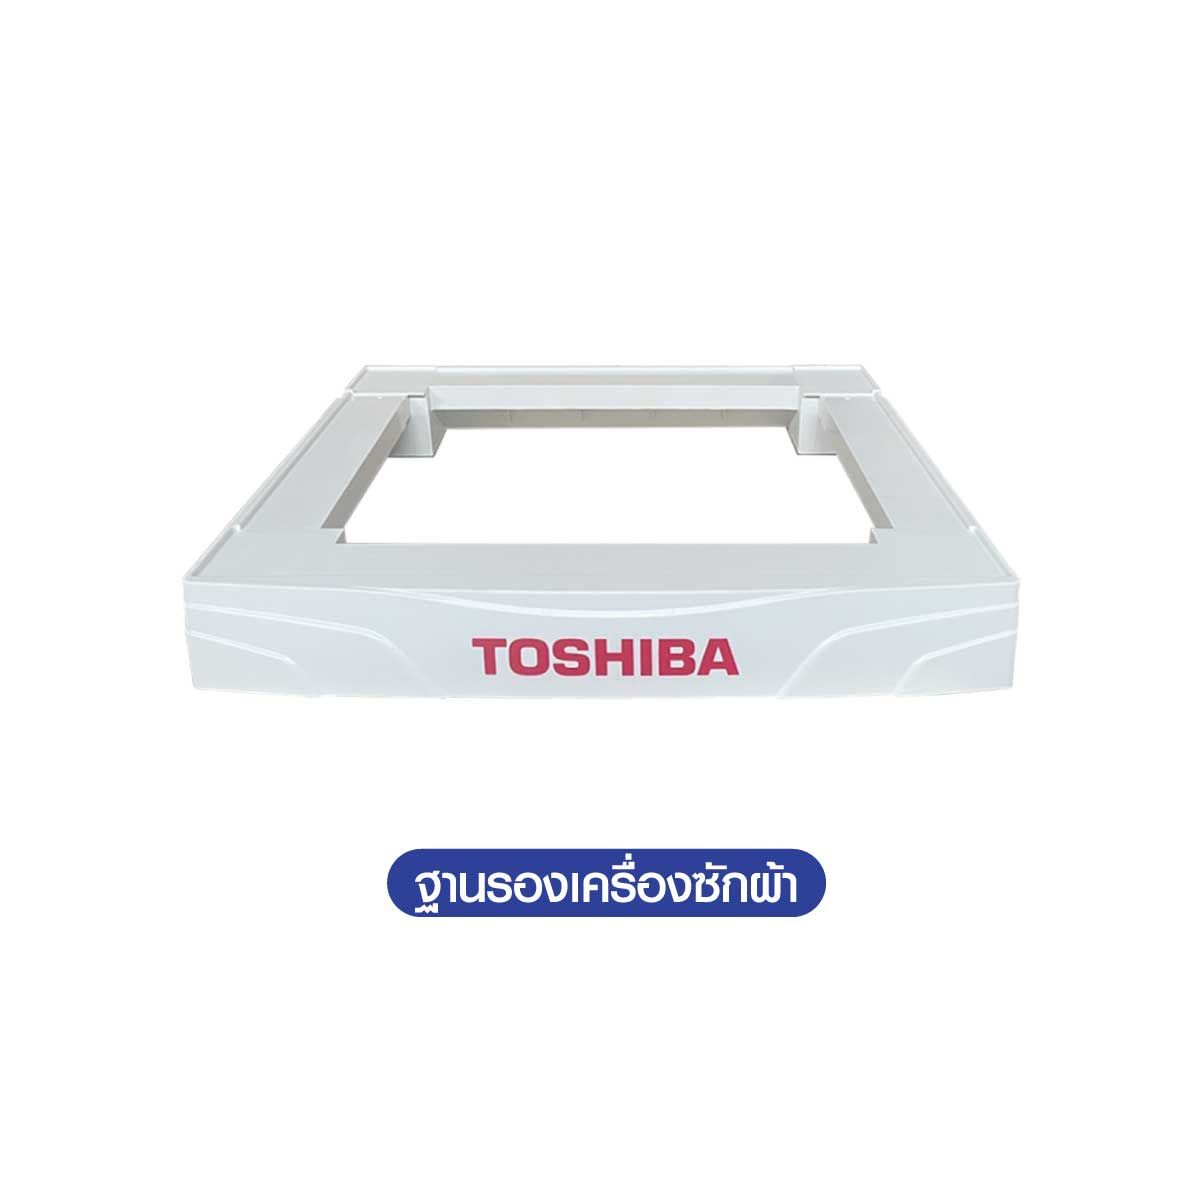 TOSHIBA เครื่องซักผ้าฝาหน้า  7.5 กก.INVERTER  สีขาว รุ่น TW-BH85S2T